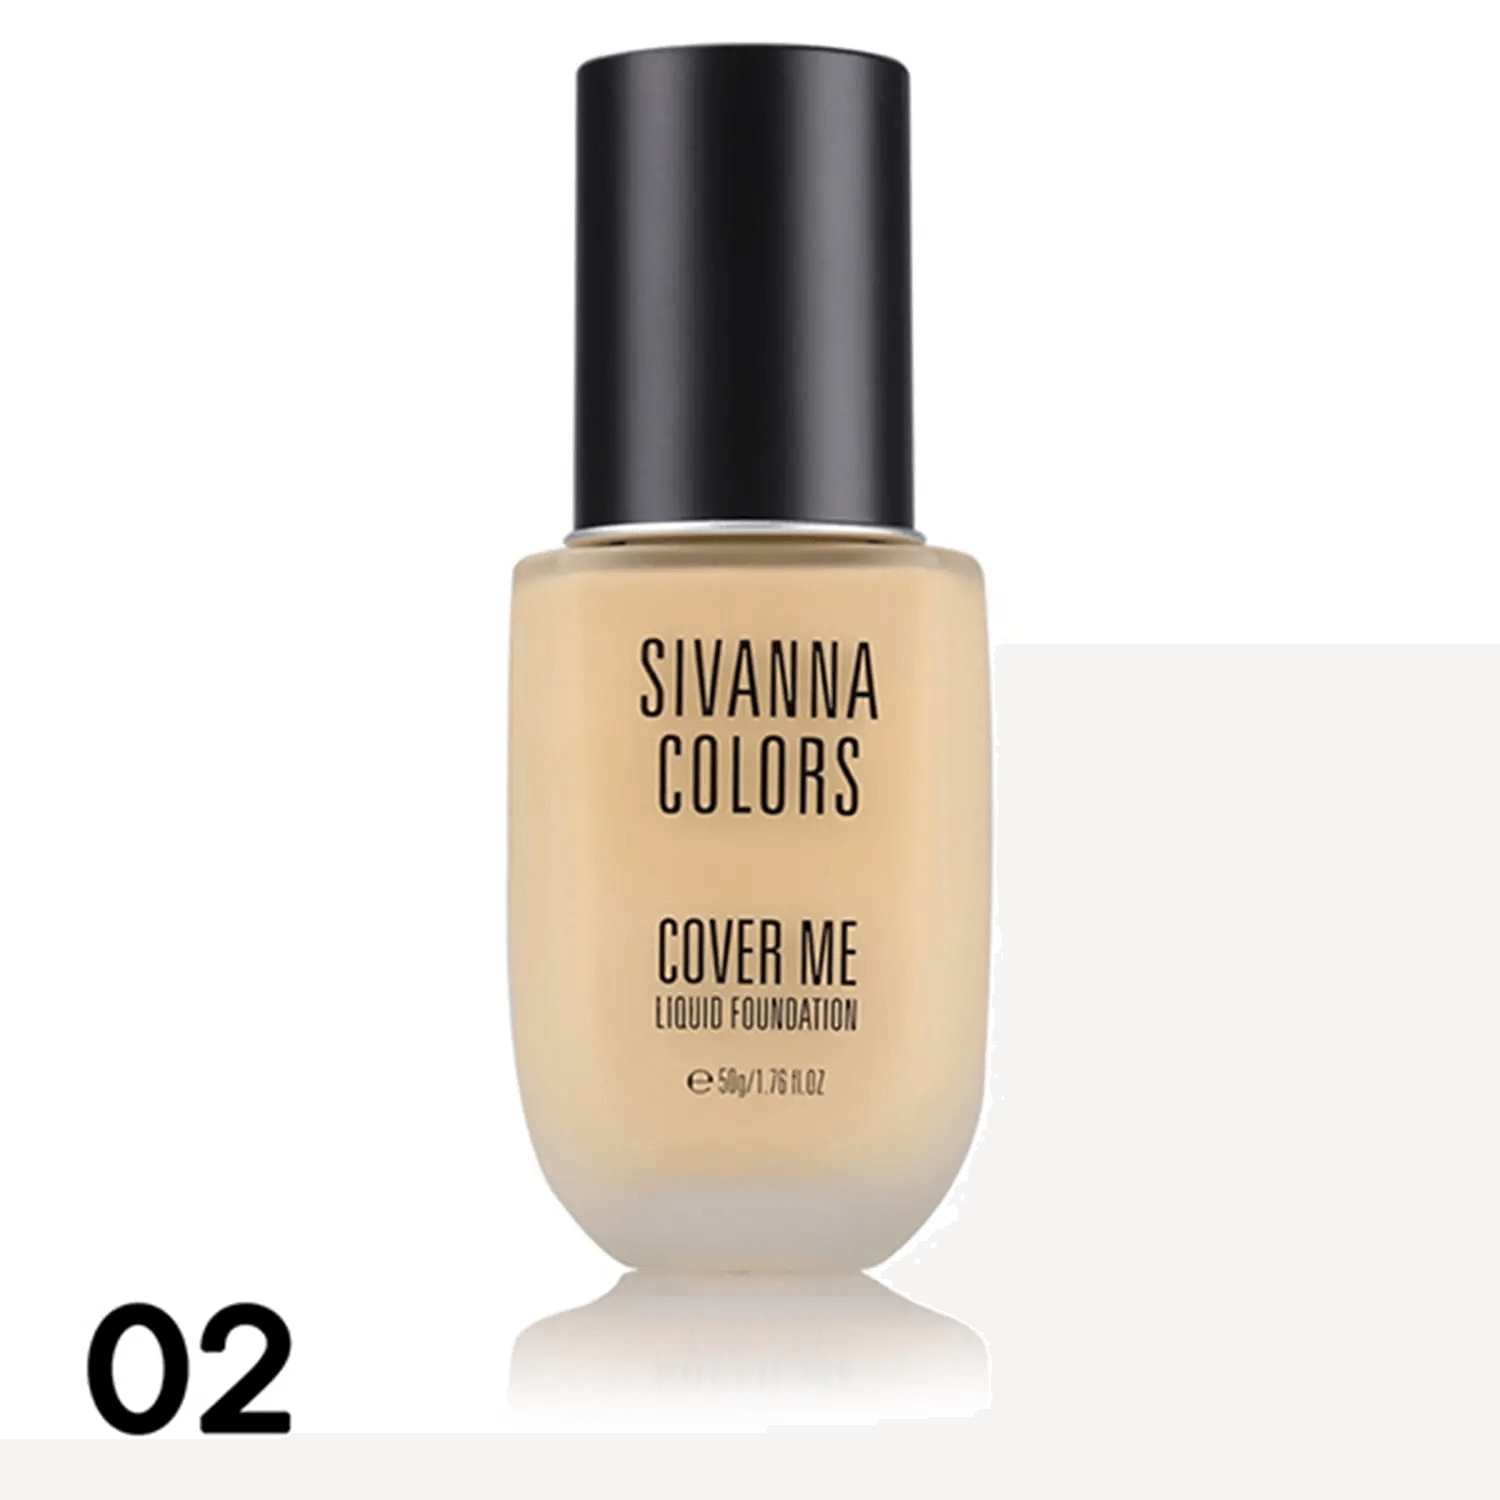 Sivanna | Sivanna Colors Cover Me Liquid Foundation - 02 Shade (50g)